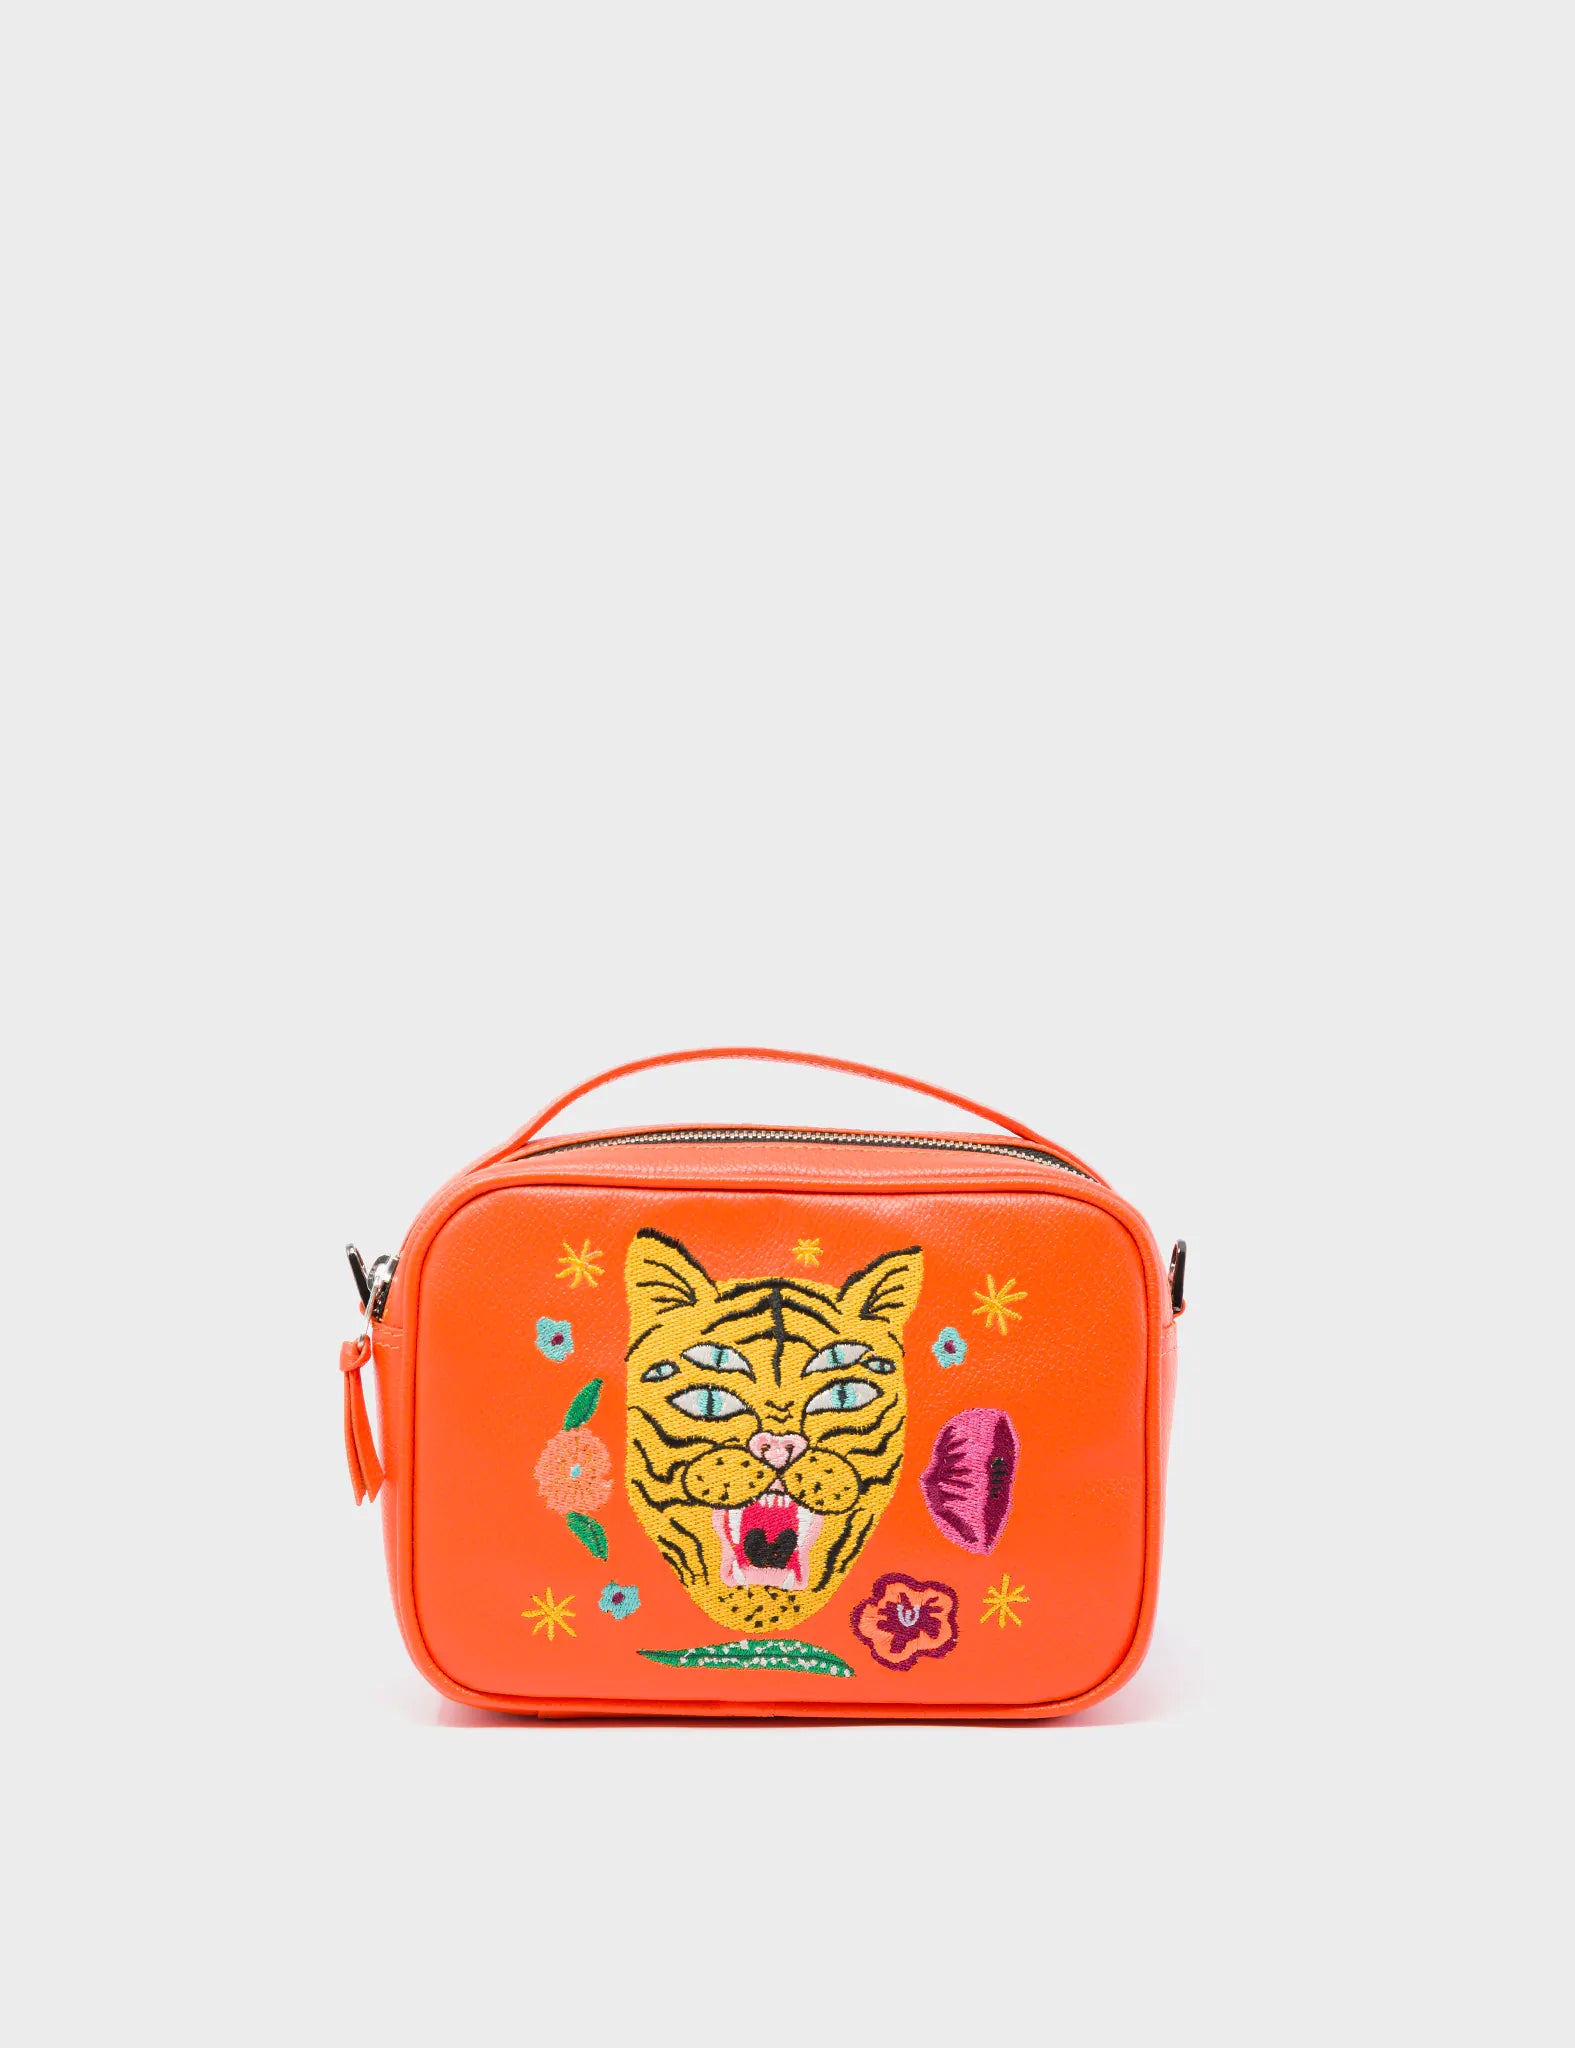 Verto Crossbody Vermillion Orange Leather Handbag - Tiger and Flowers Embroidery - Front